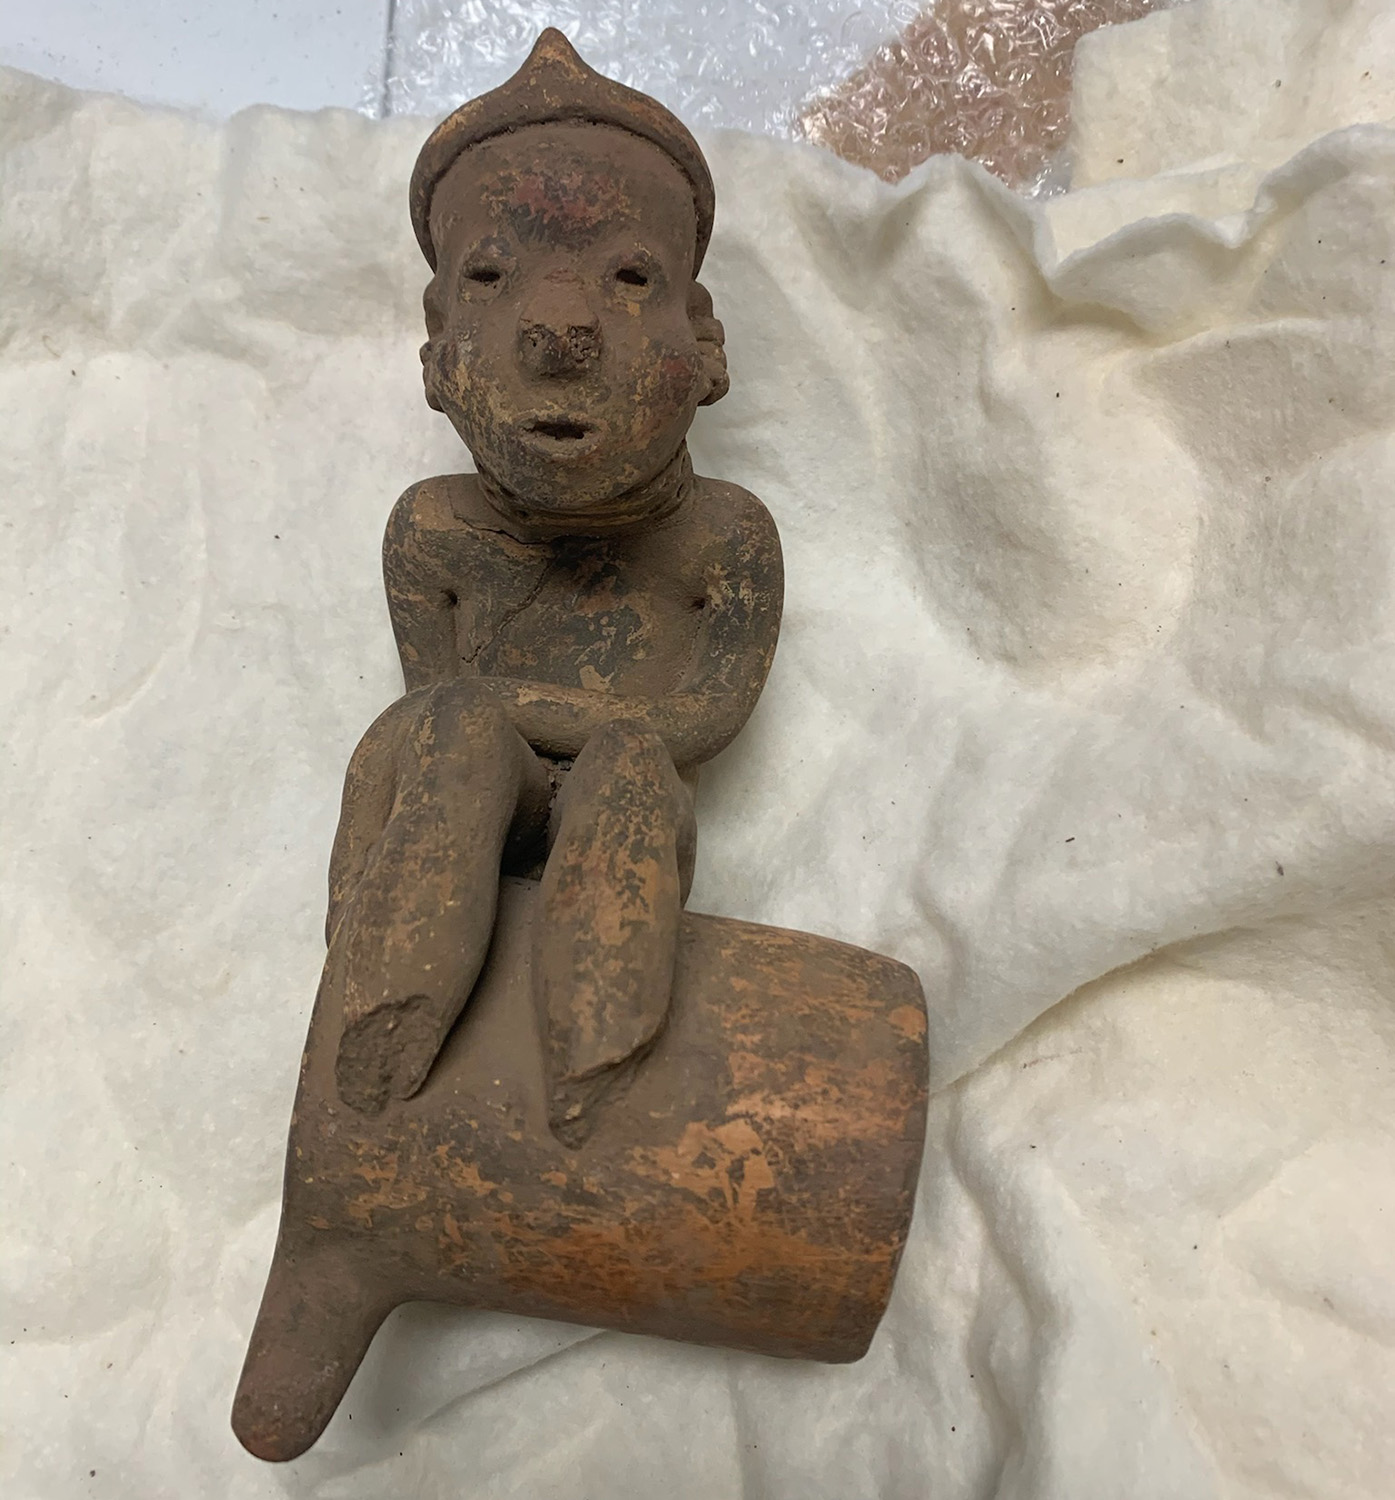 HSI Arizona devuelve cientos de artefactos precolombinos a México